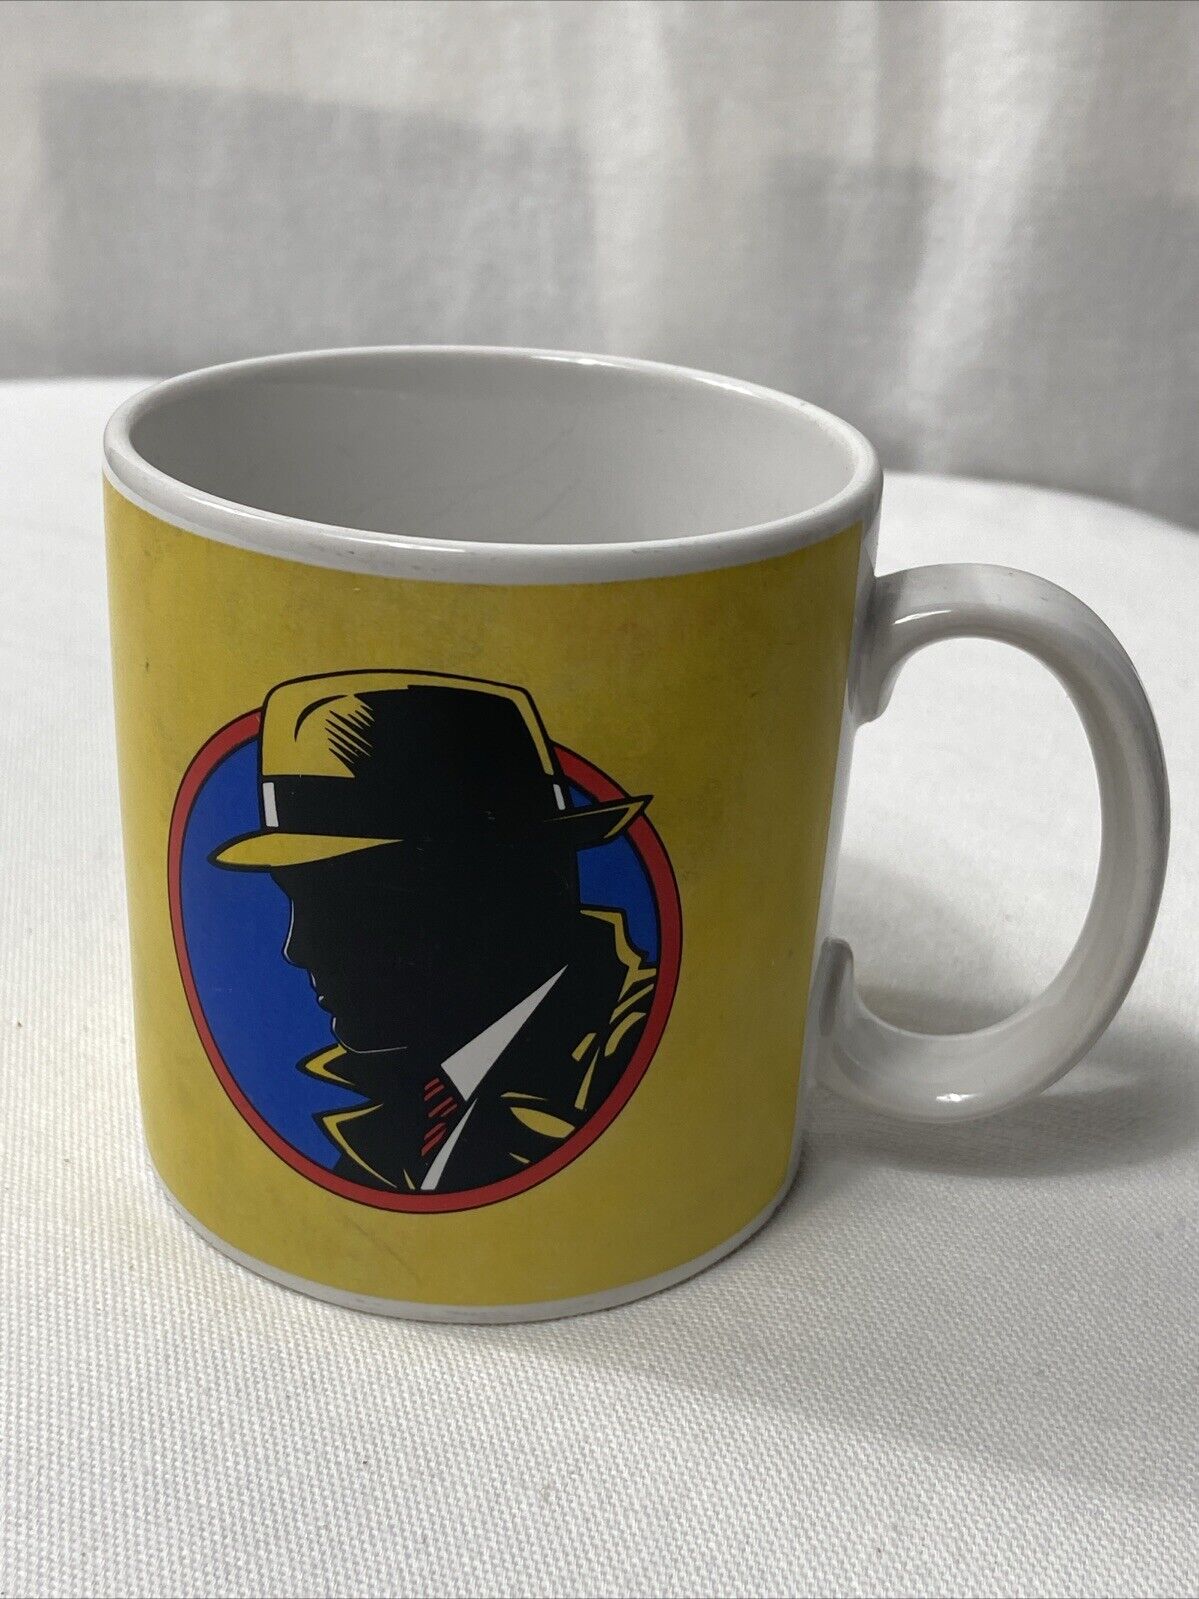 Walt Disney Dick Tracy Character Coffee Mug by Applause Inc  EL 4516)7